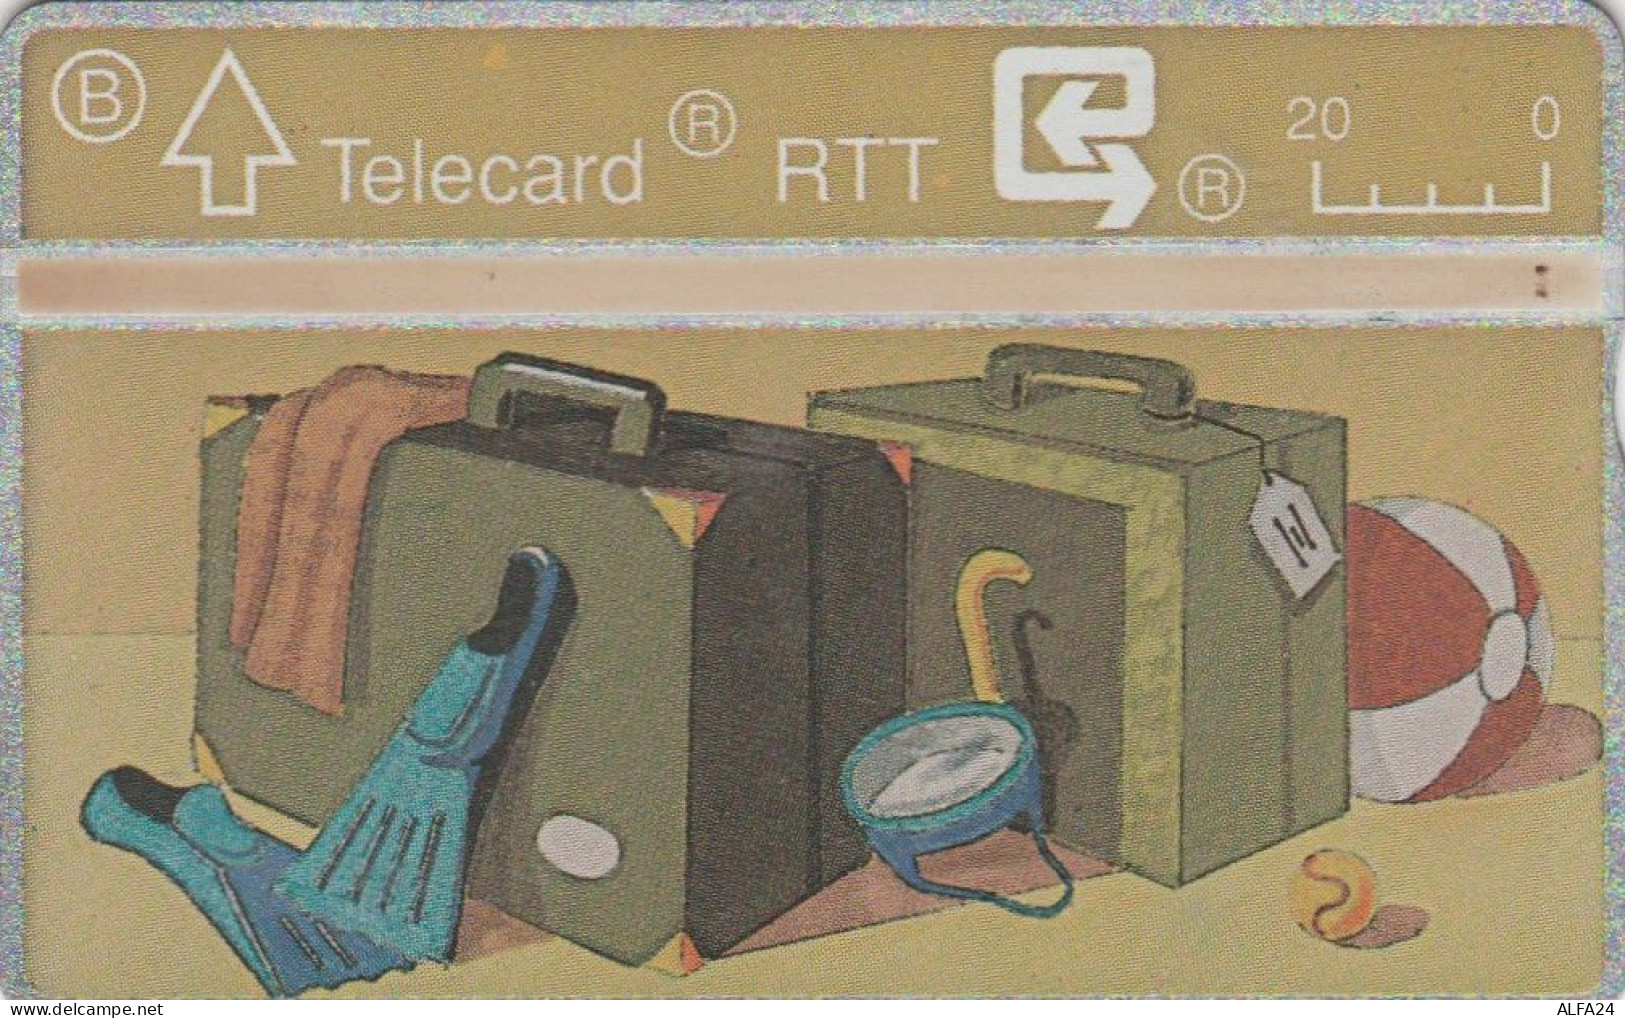 PHONE CARD BELGIO LANDYS (CK1808 - Senza Chip